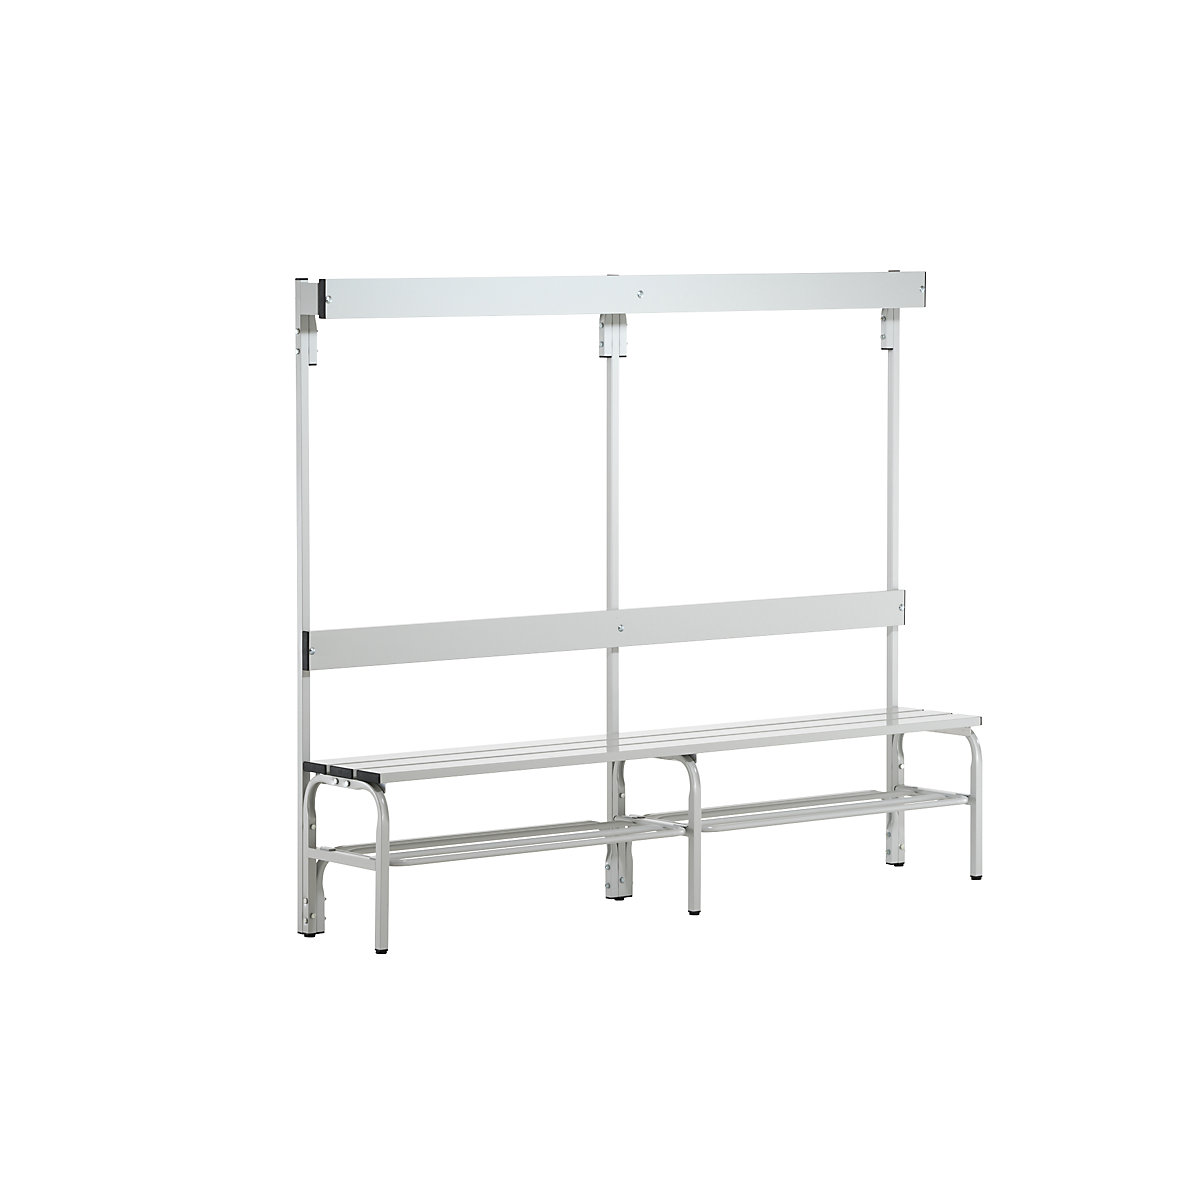 Sypro – Changing room bench with aluminium slats, HxD 1650 x 375 mm, single sided, length 1500 mm, 6 hooks, light grey, shoe rack